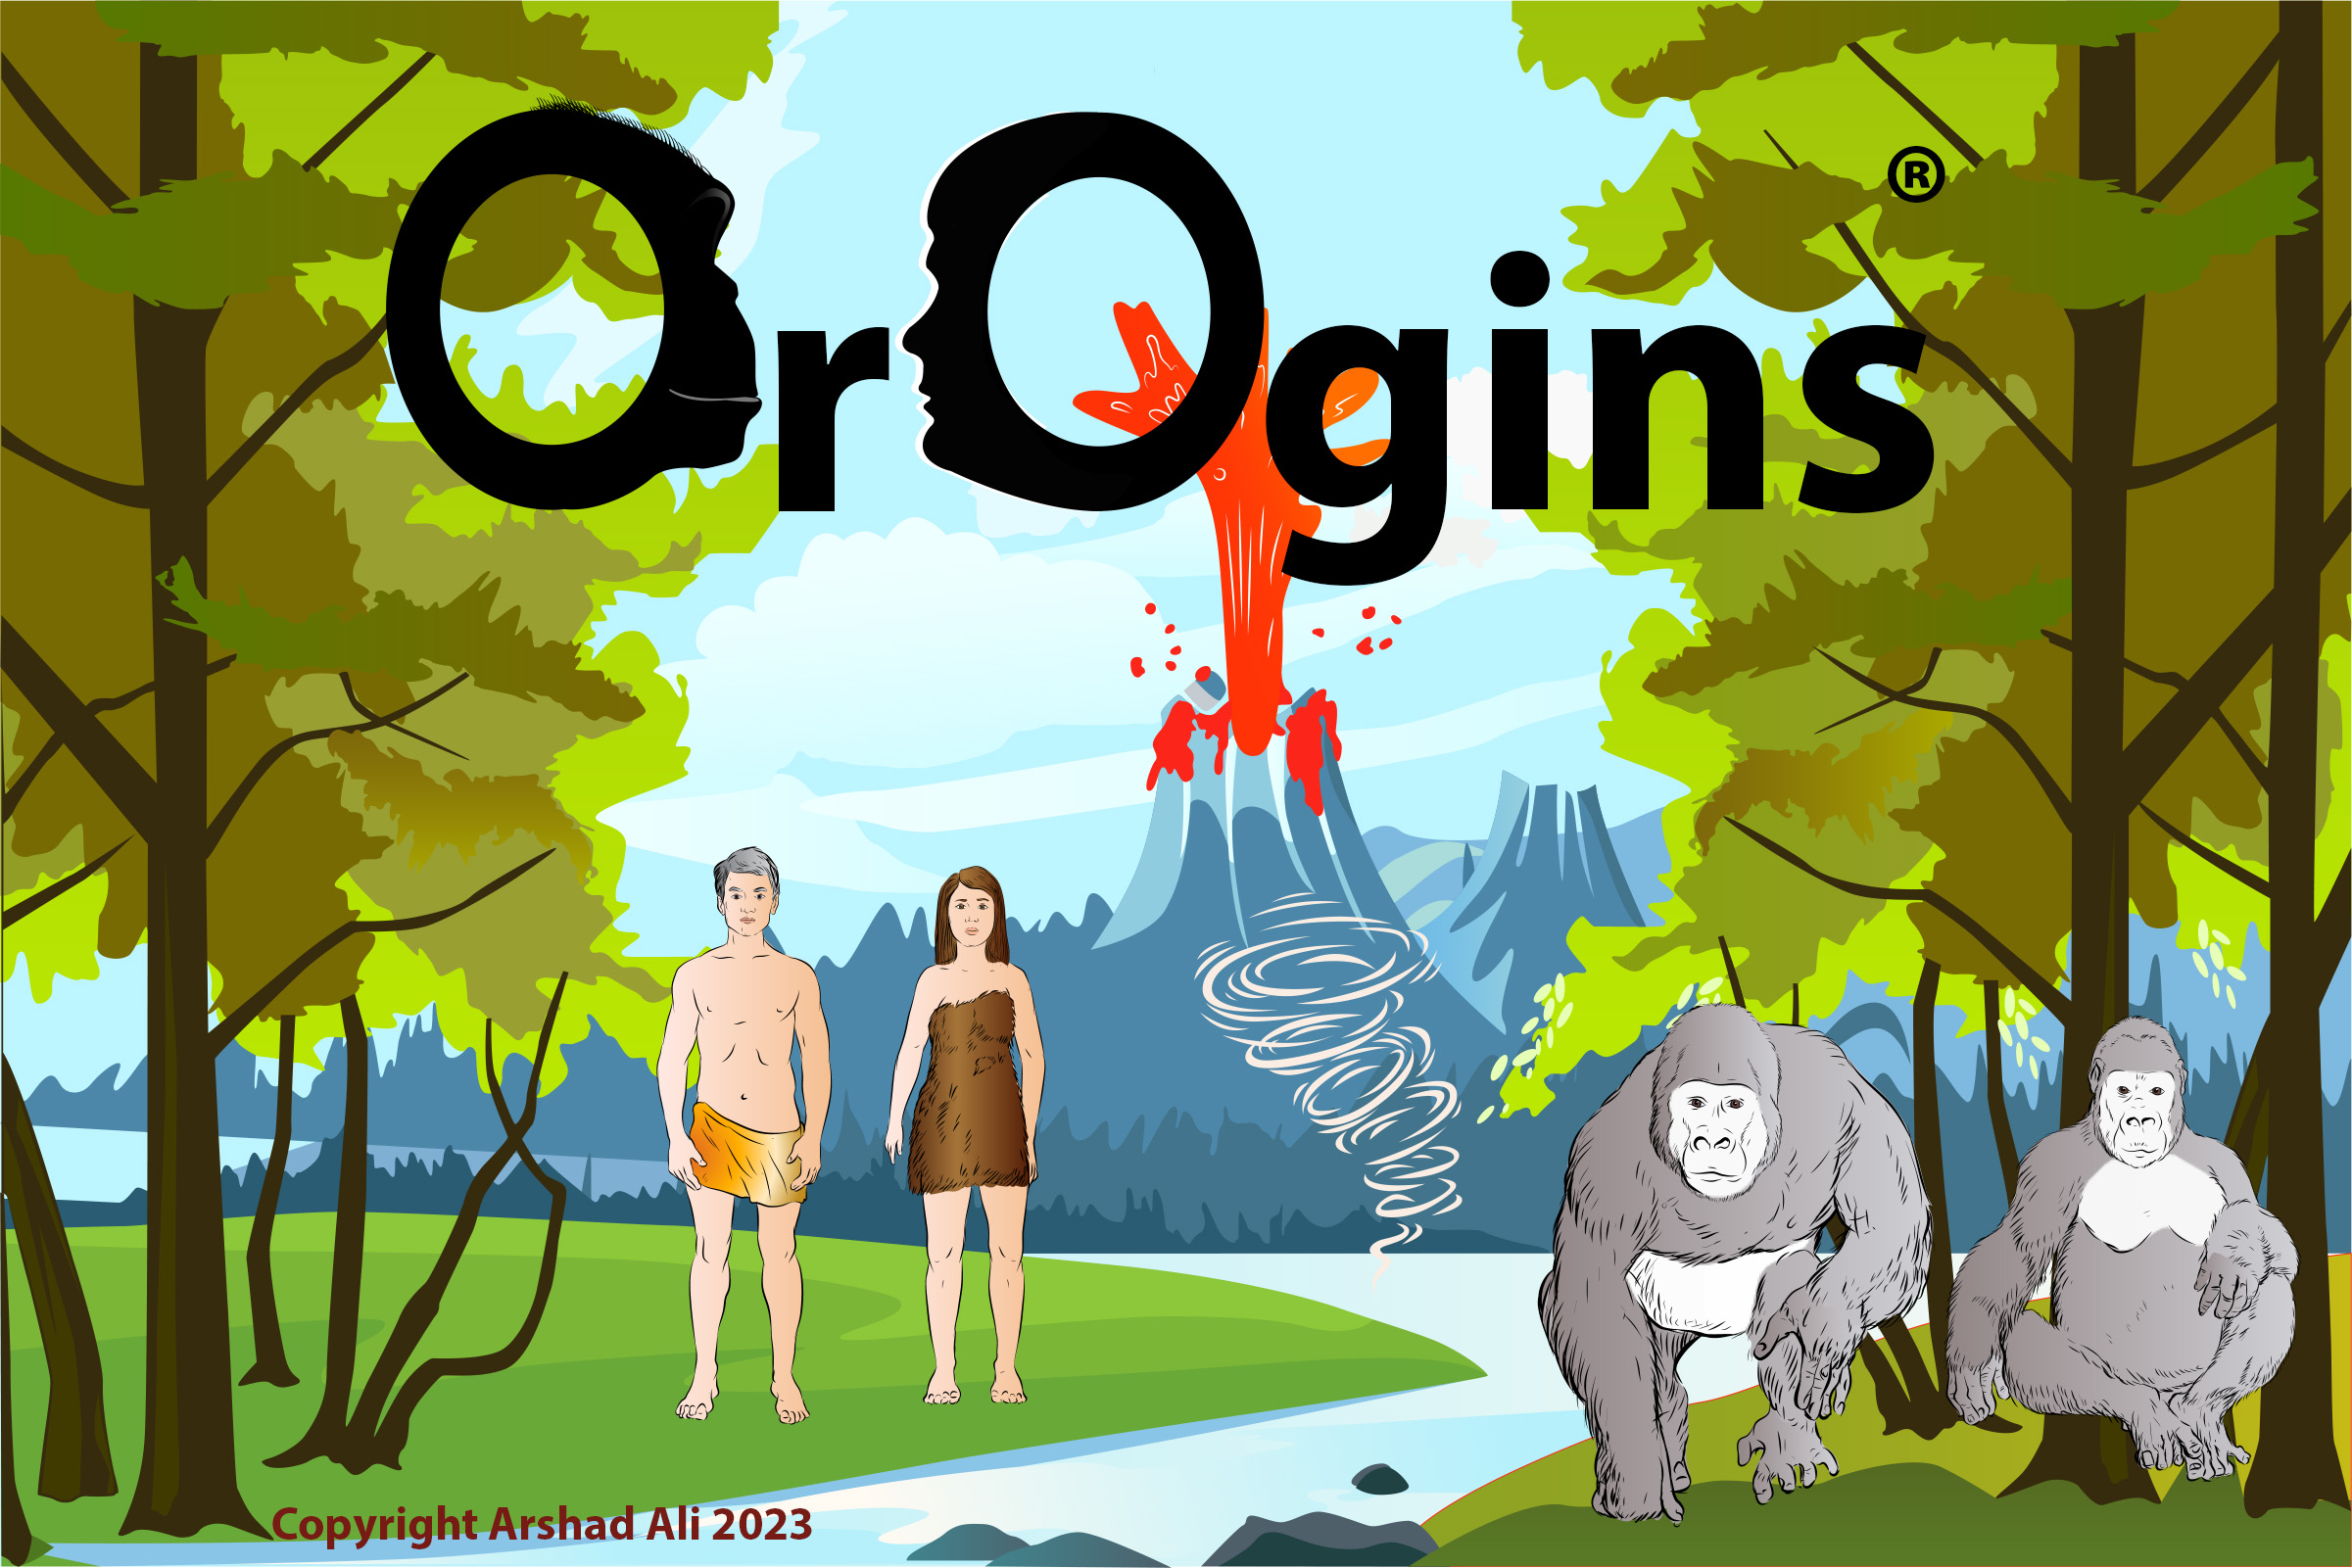 Orogins